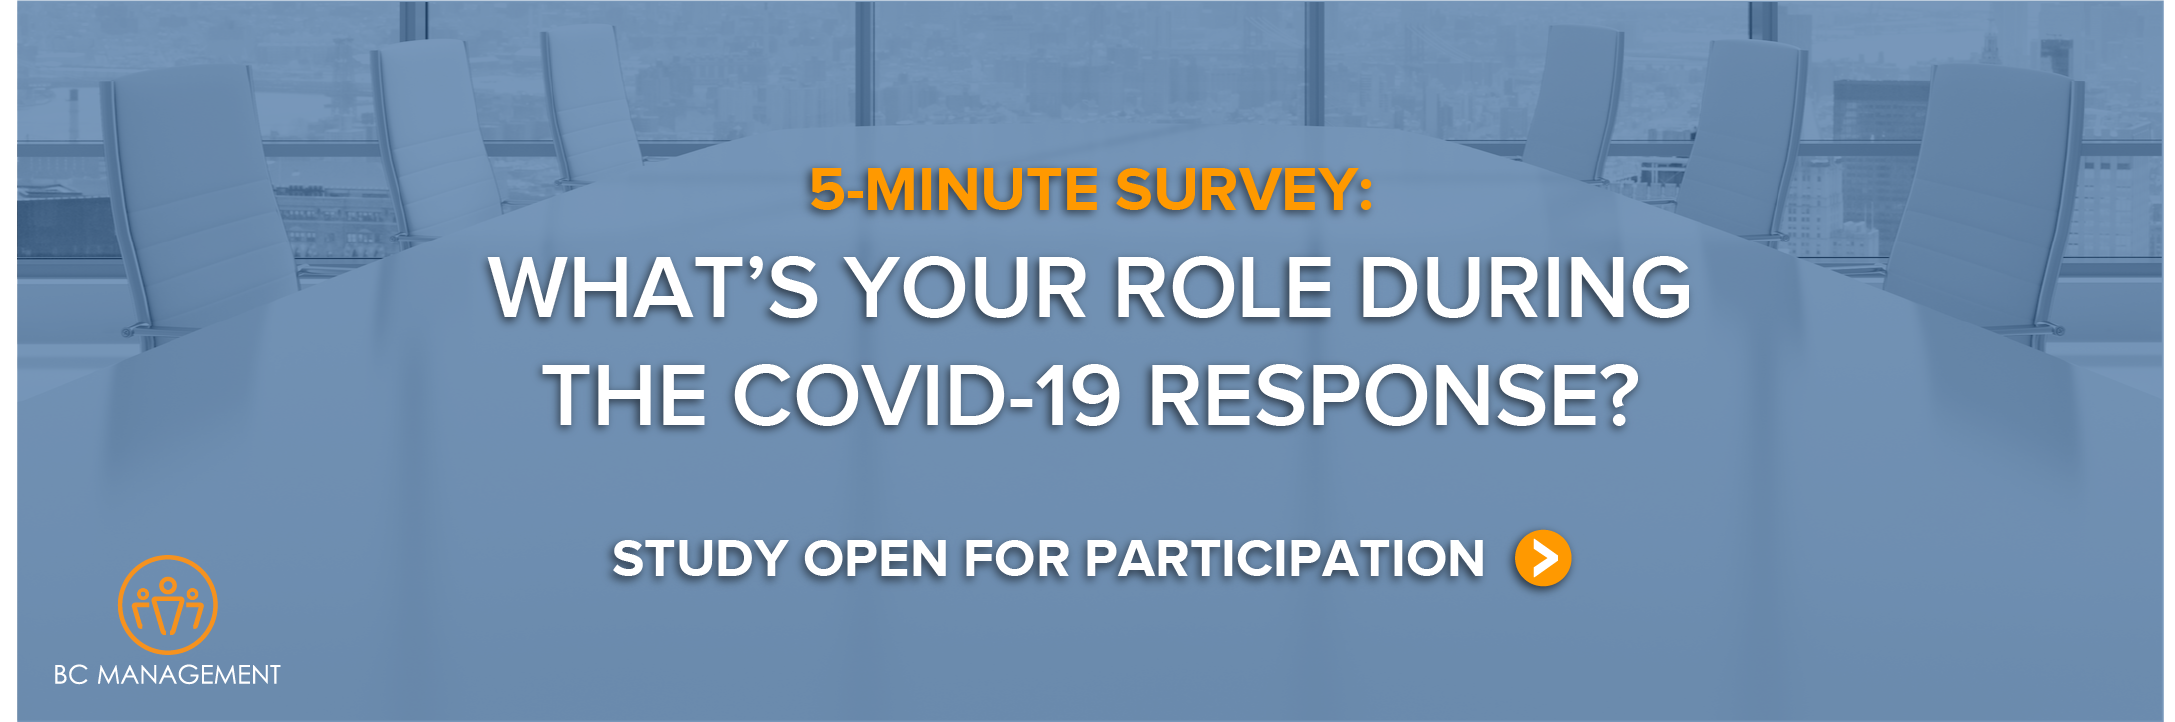 BC Management - COVID-19 Response Survey - Web Page Banner (002)